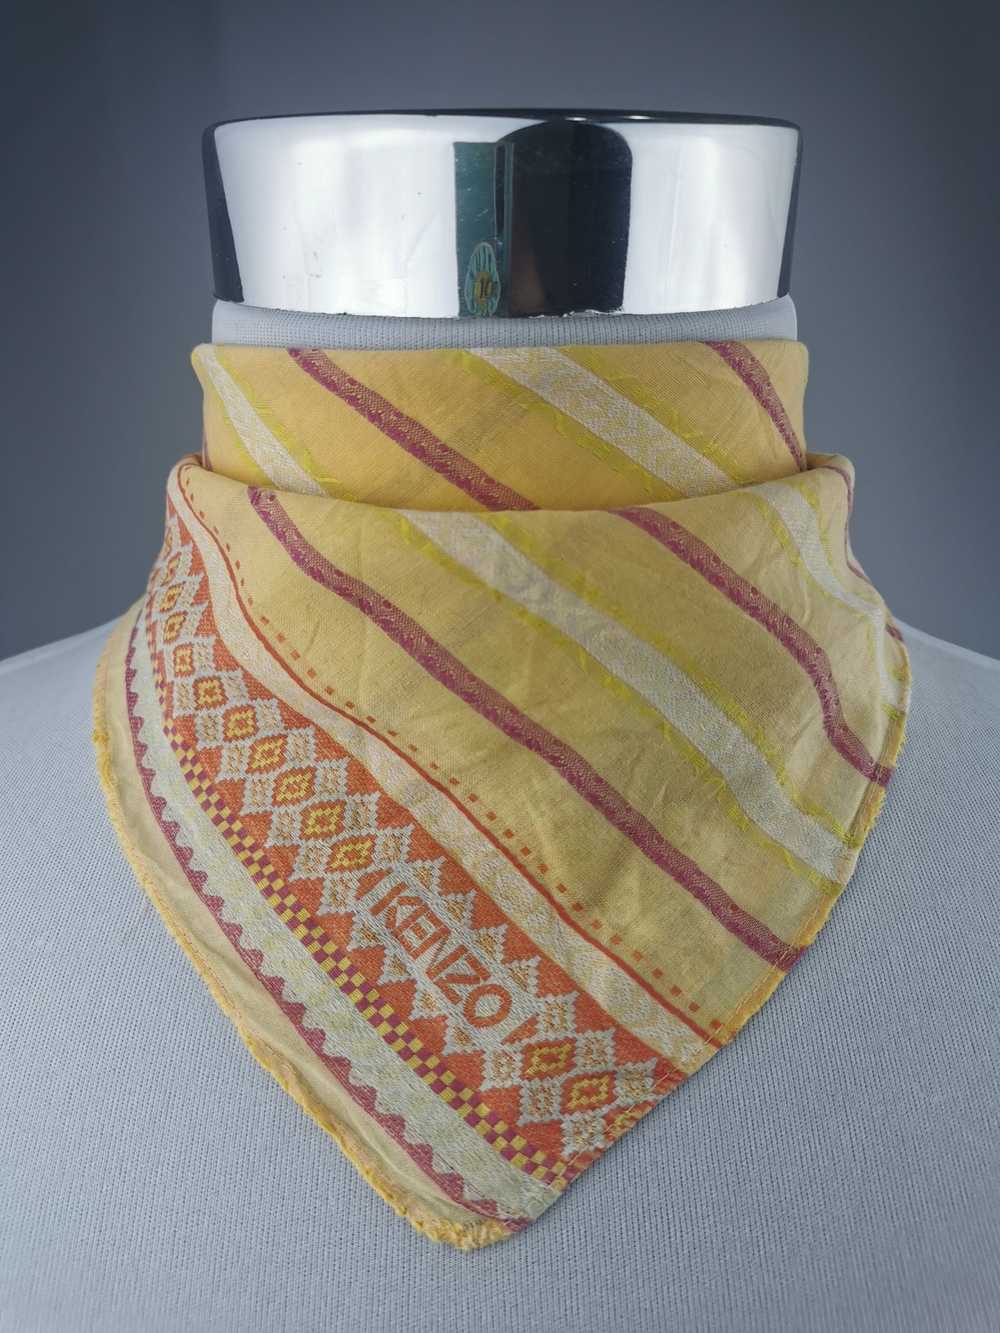 Kenzo Kenzo handkerchief / bandana / neckerchief - image 1